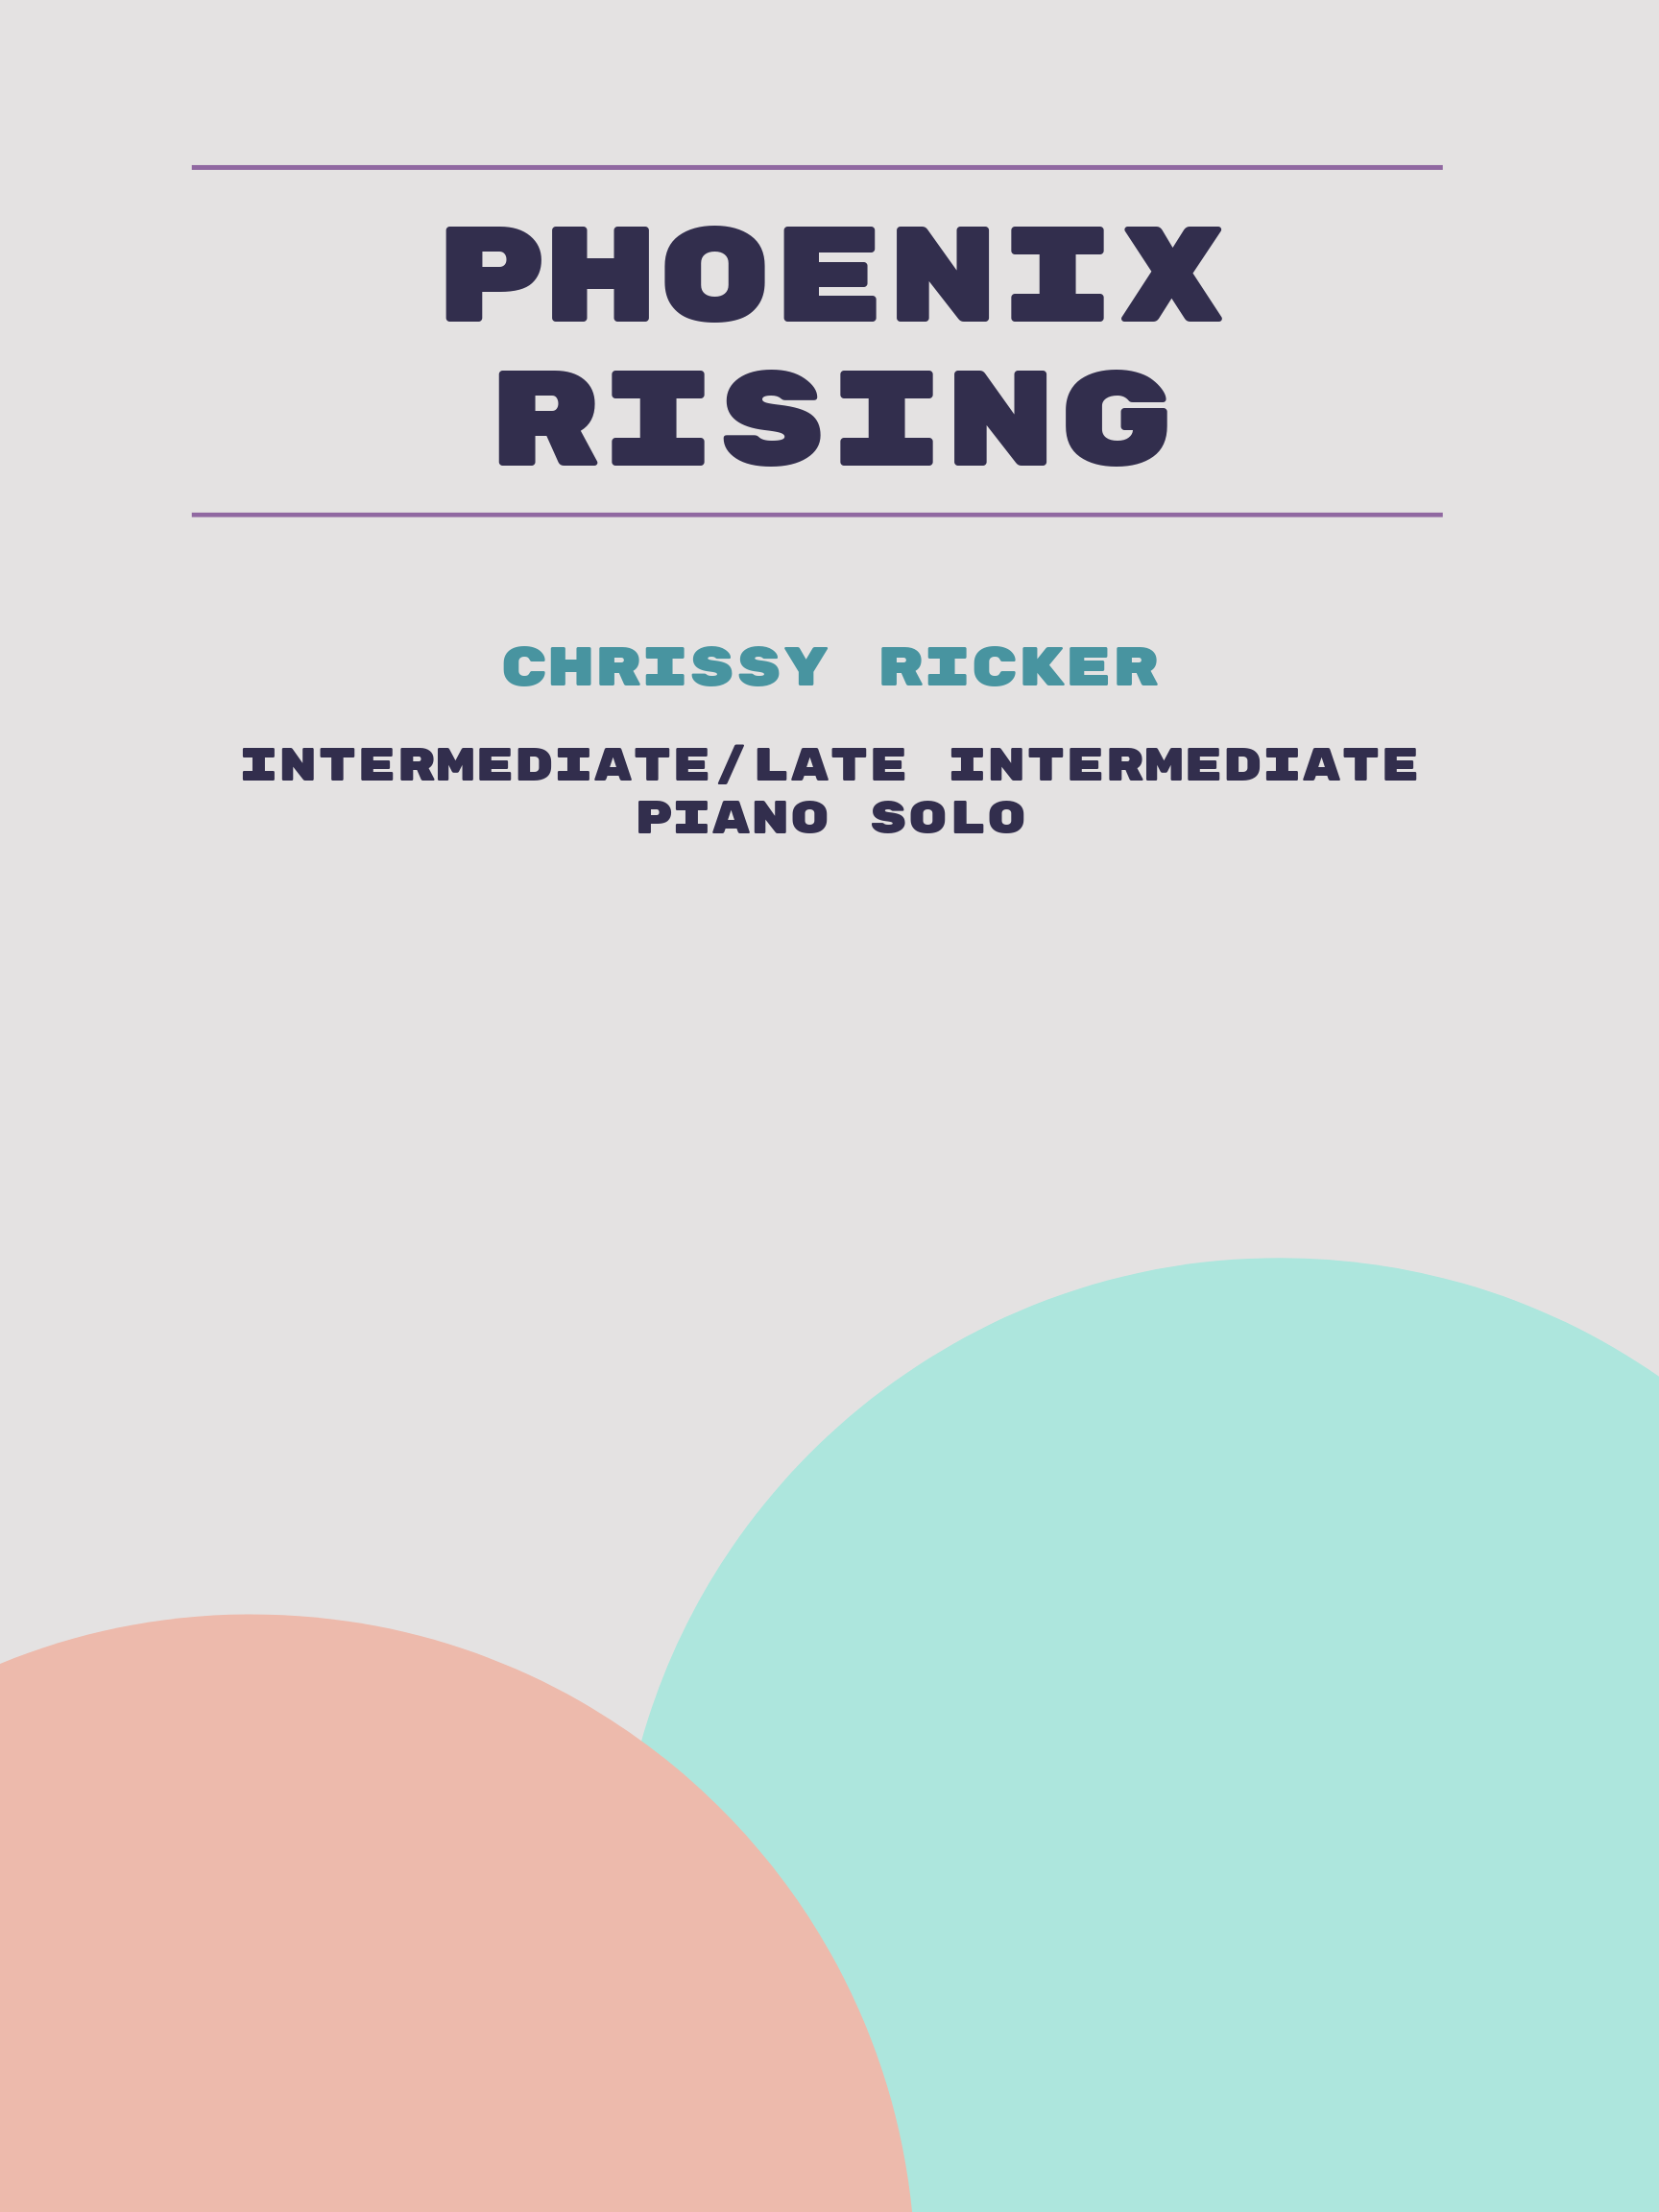 Phoenix Rising by Chrissy Ricker